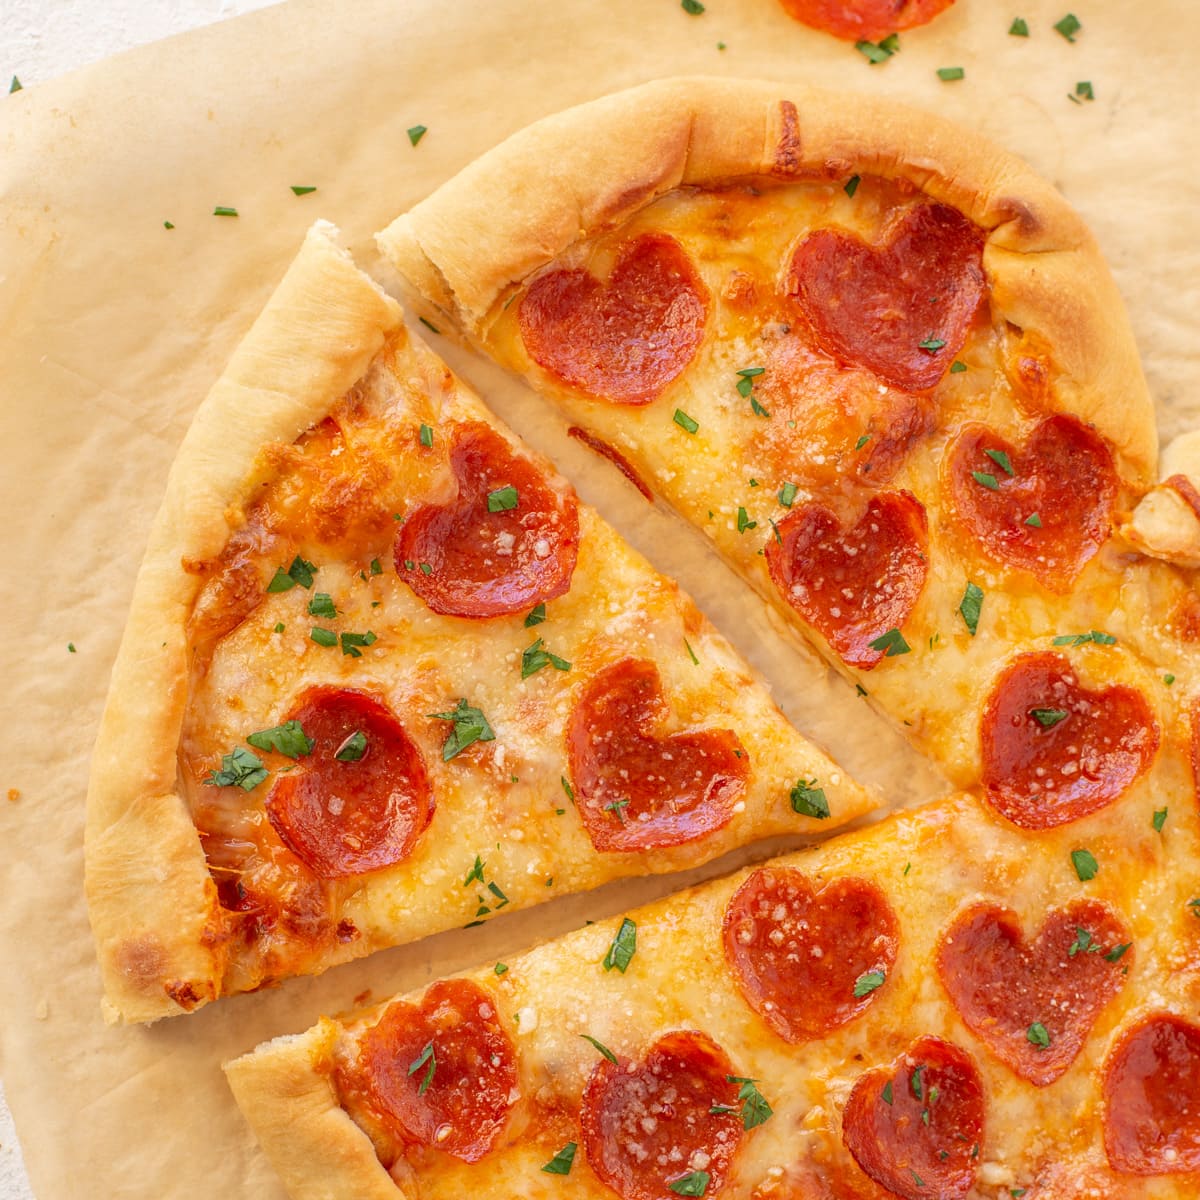 Slice of Heart shaped pizza